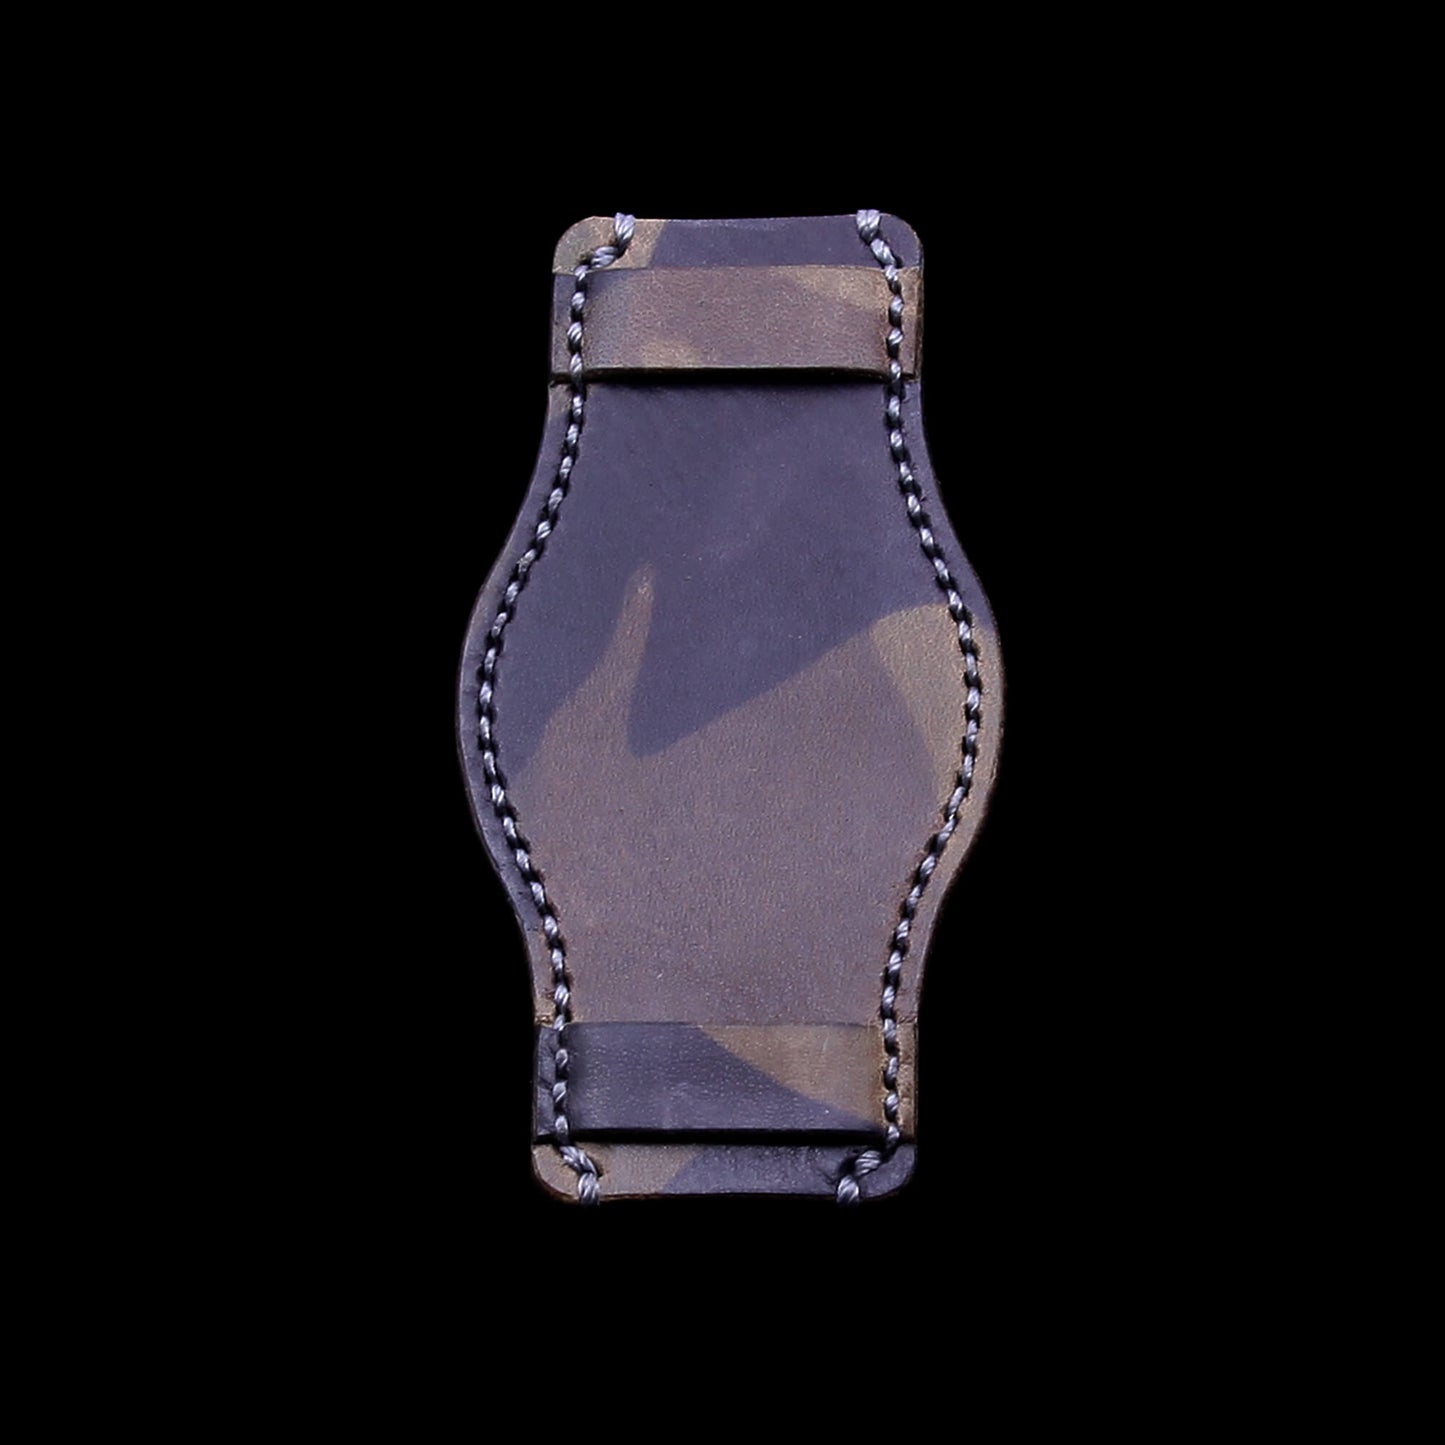 Leather Bund Pad, Style II Camo Grigio | Full Grain Italian Veg Tanned Leather | Cozy Handmade